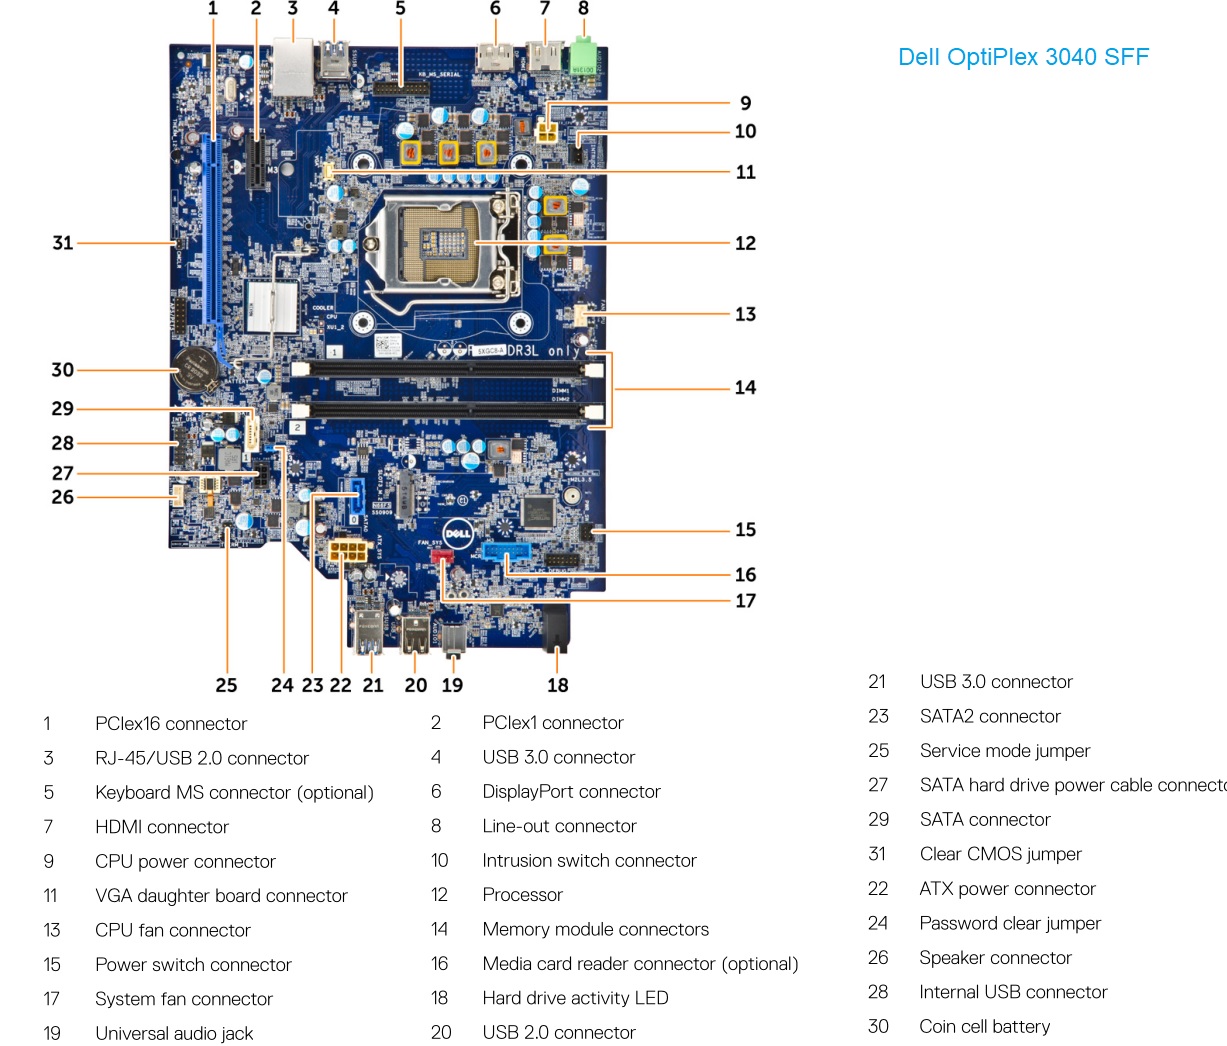 Dell OptiPlex 3040 SFF – Specs and upgrade options